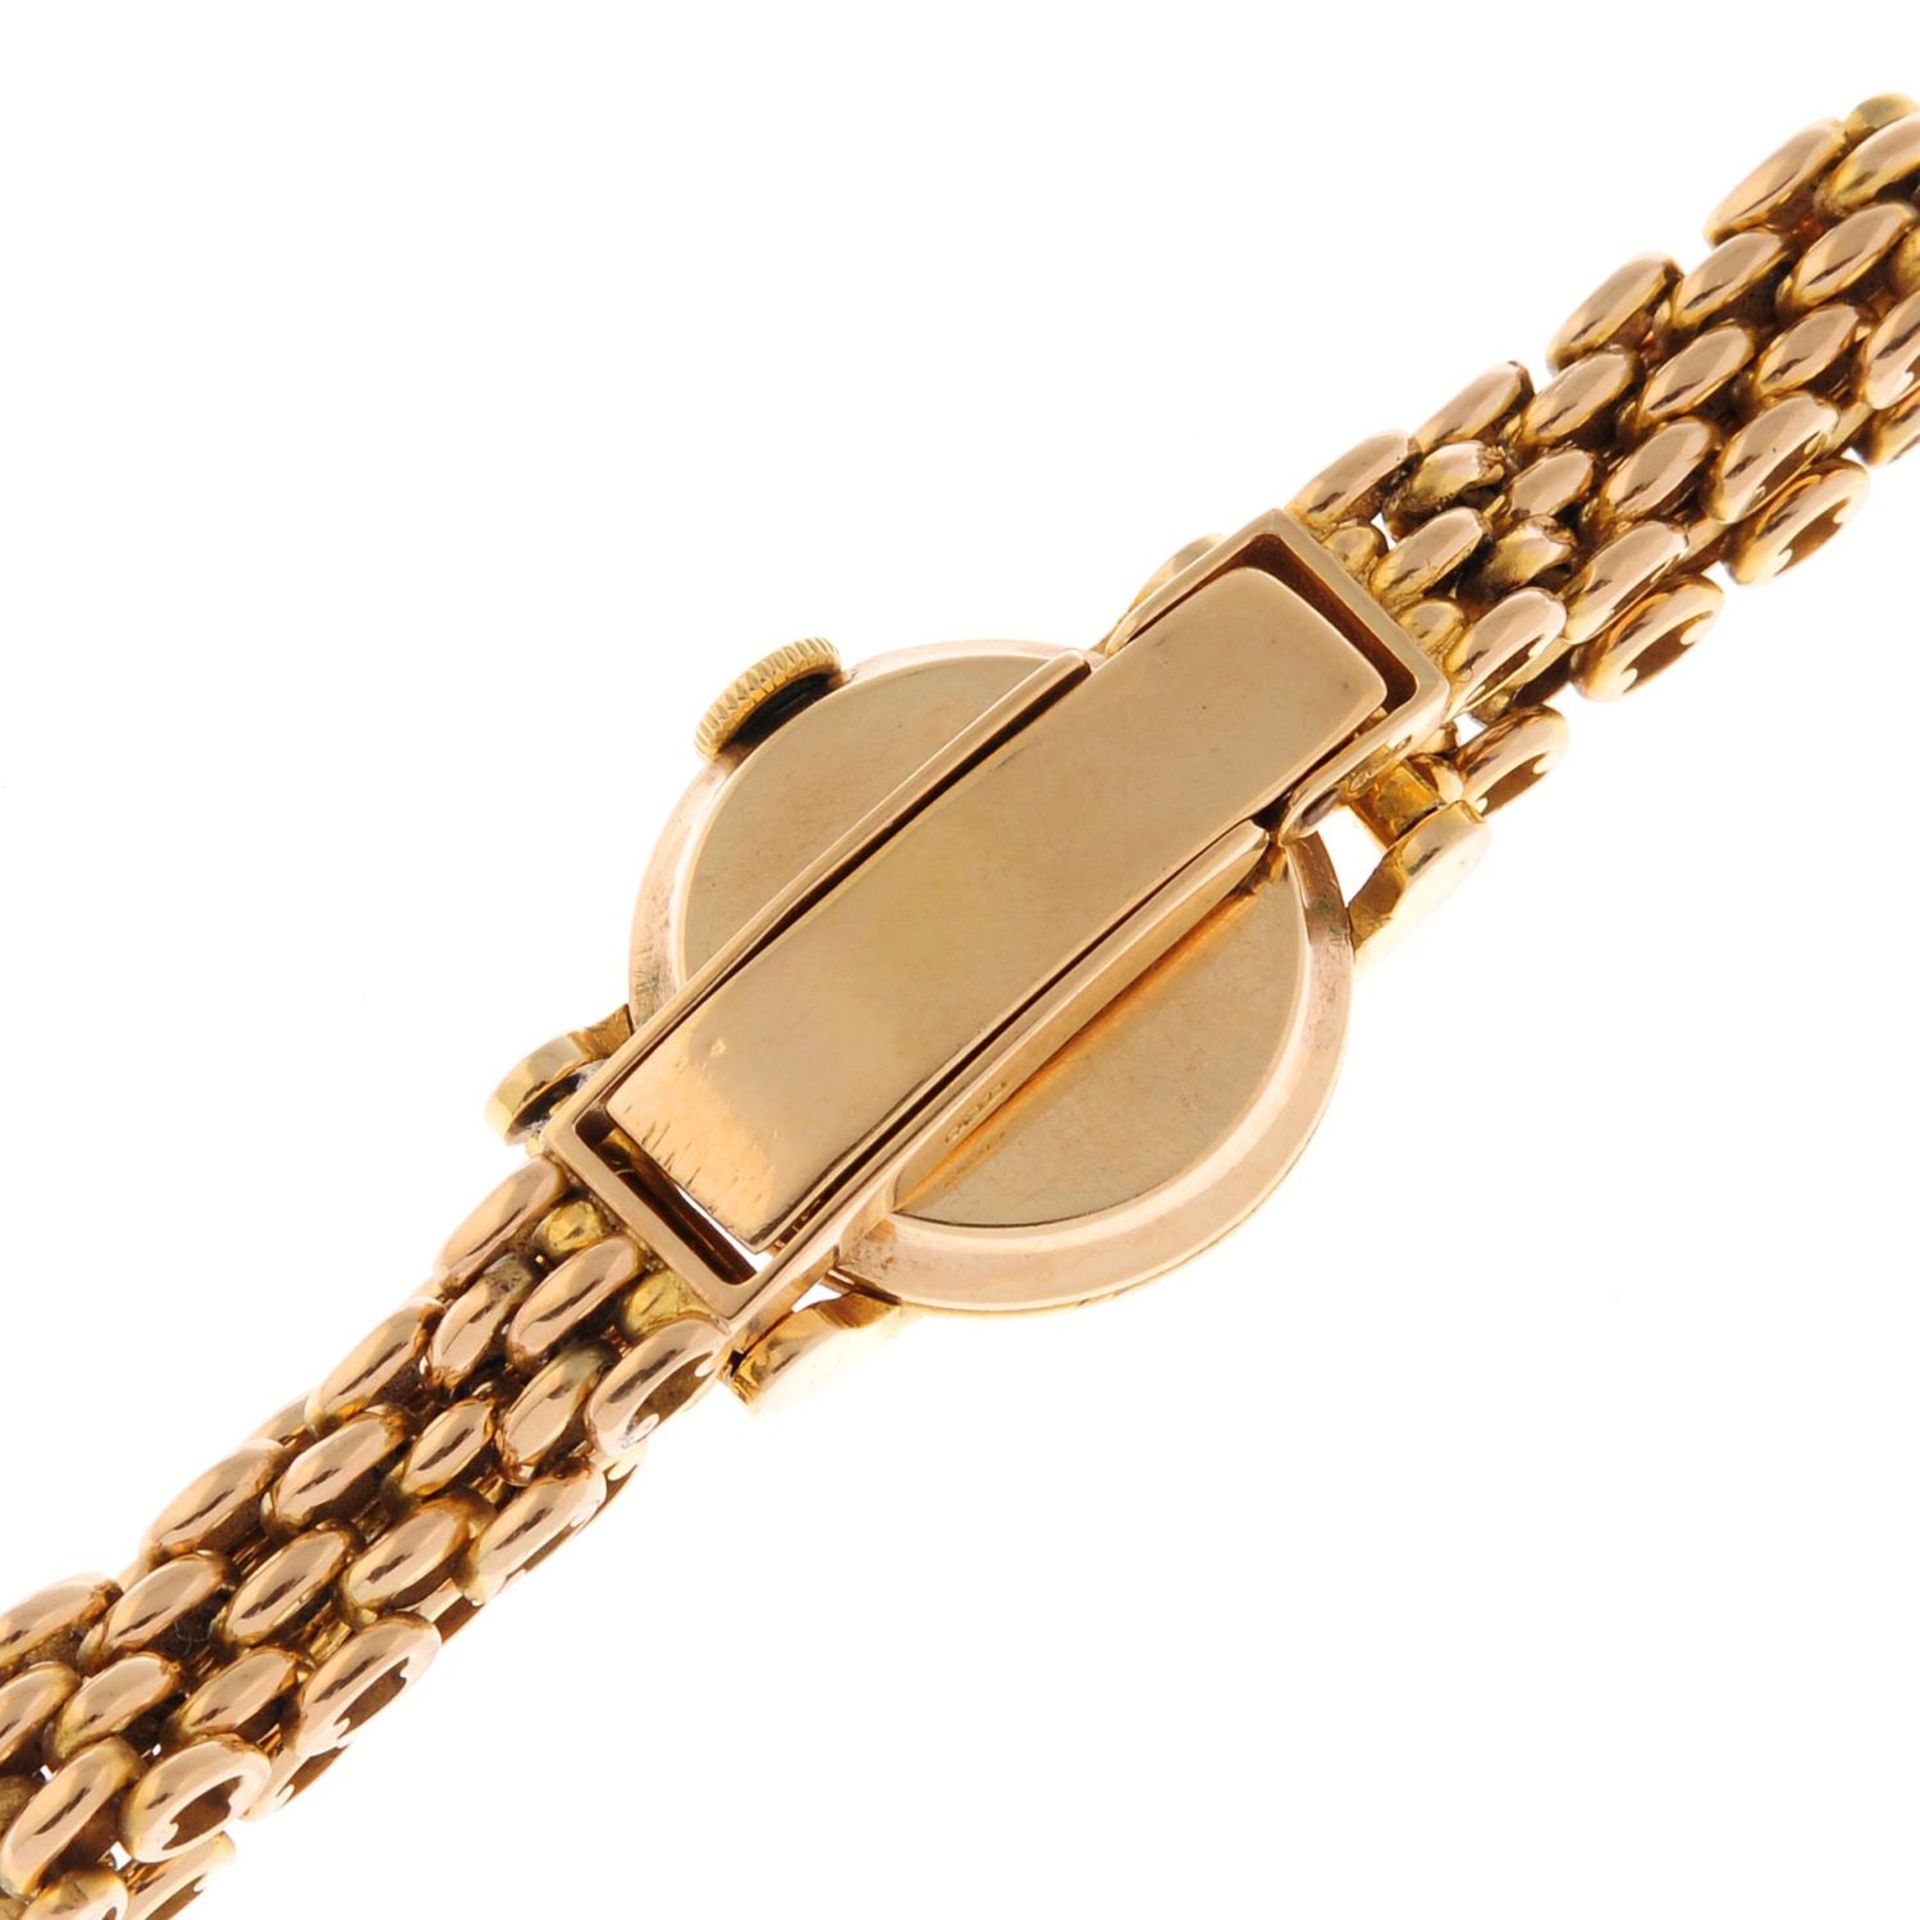 JAEGER-LECOULTRE - a bracelet watch. - Image 2 of 4